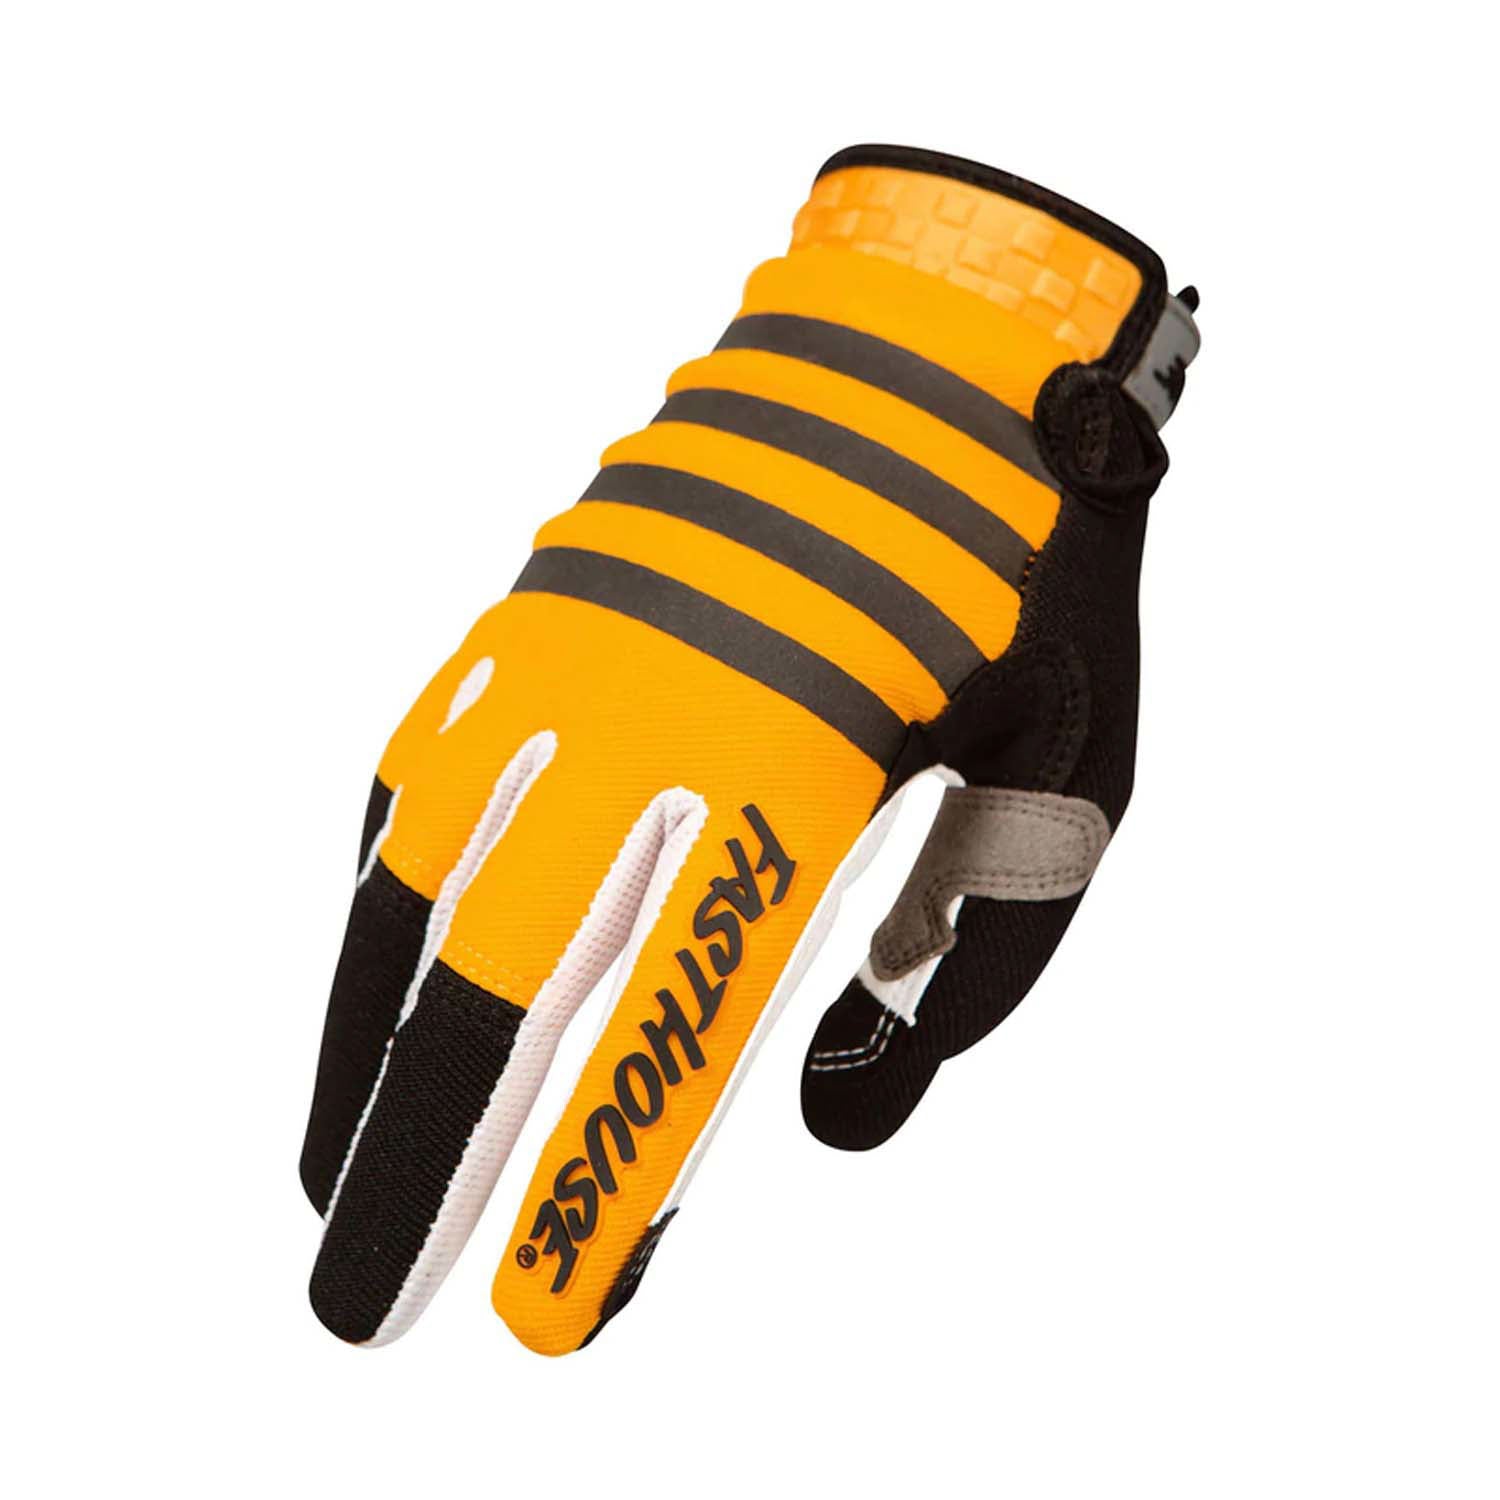 Fasthouse Speed Style Glove - Sale Striper - Yellow Black Bike Gloves